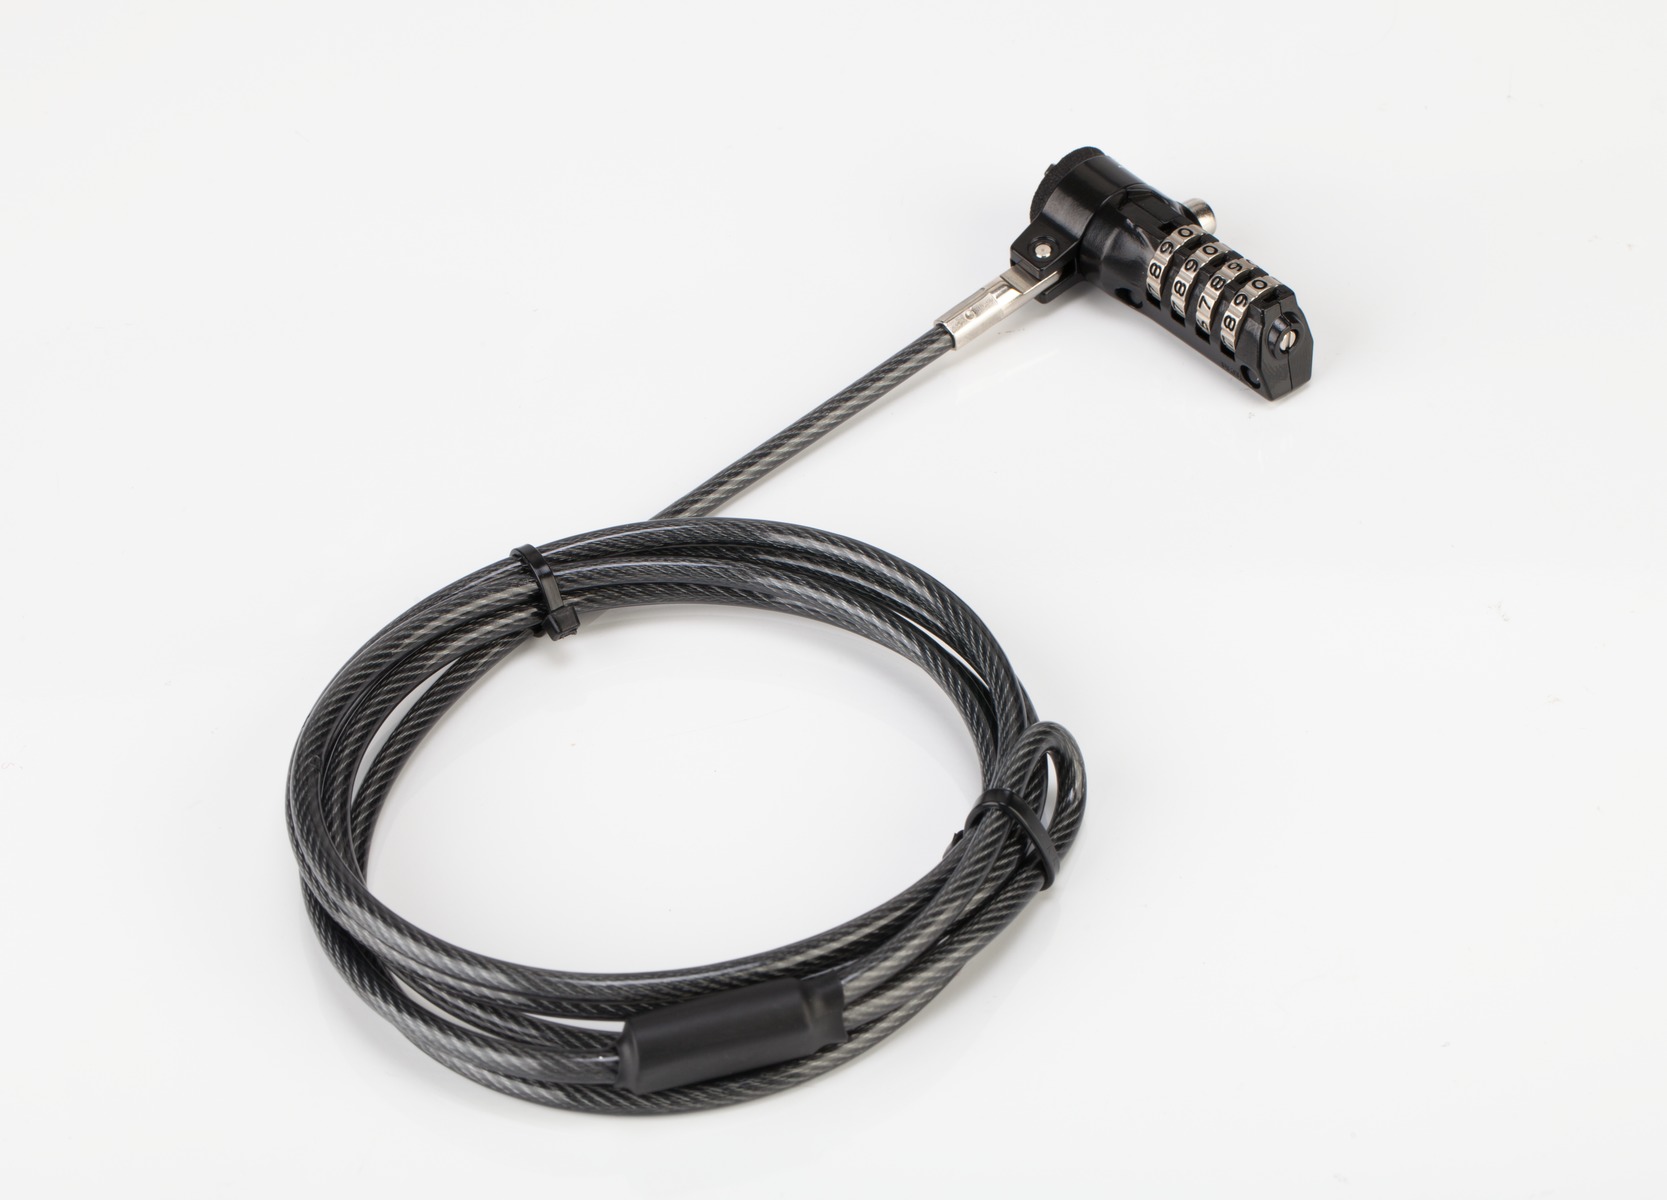  - Cable de seguridad T-lock resetteable Targus 2